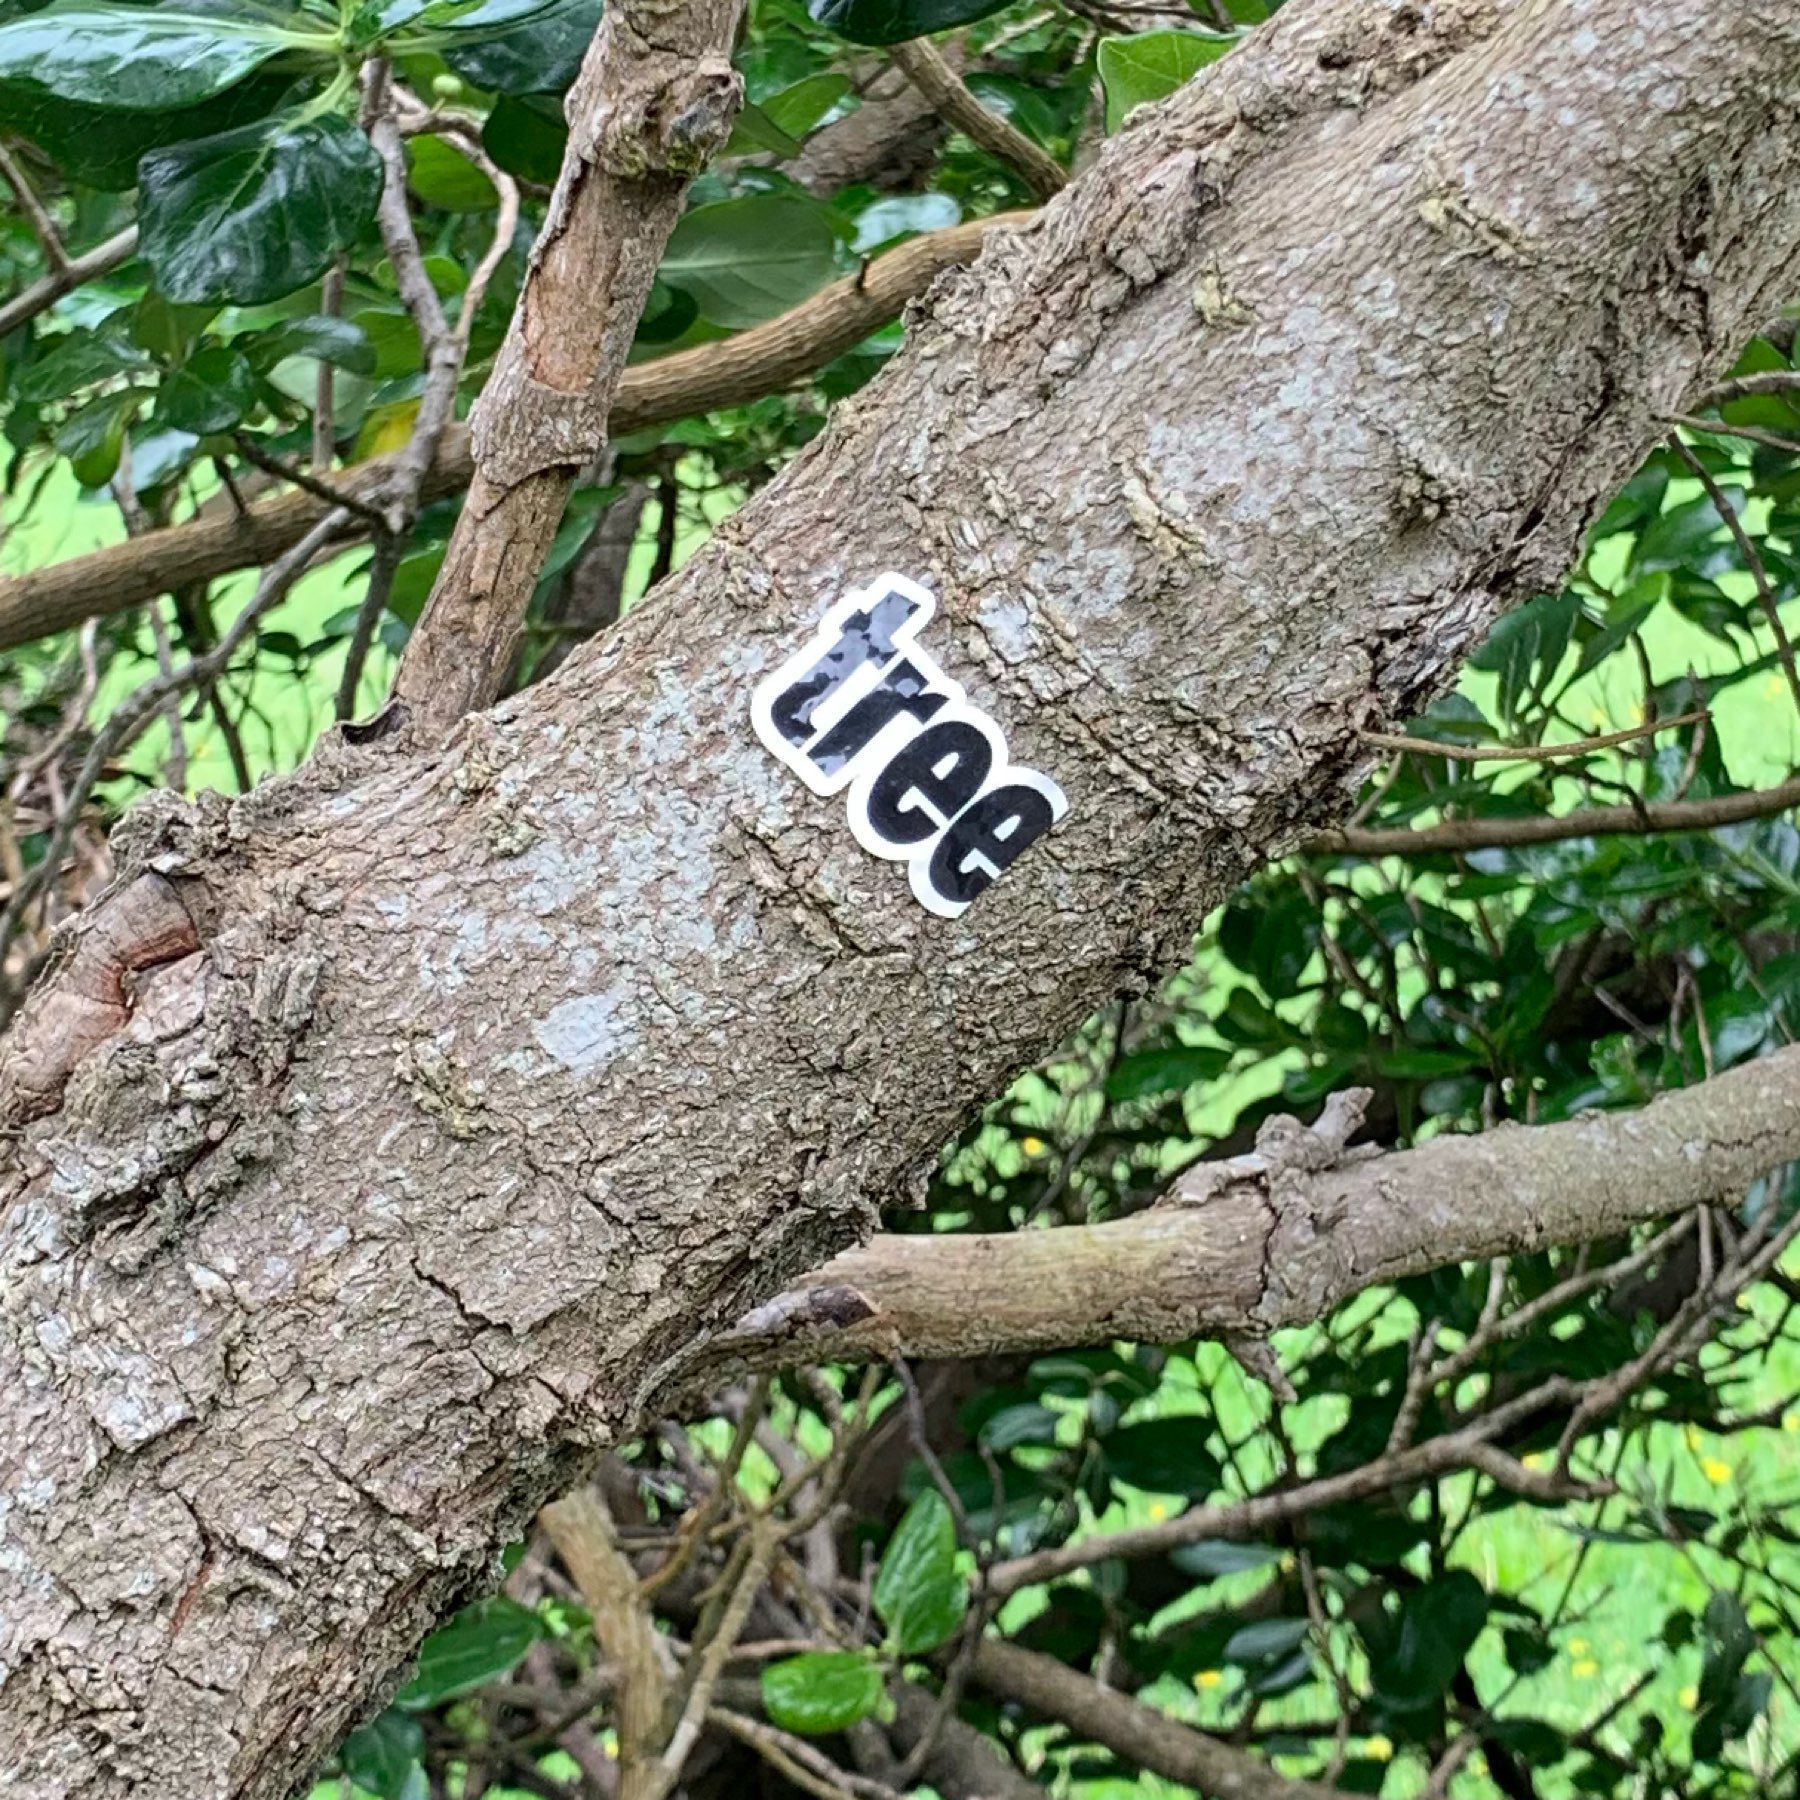 A tree brach with a sticker on it that says tree